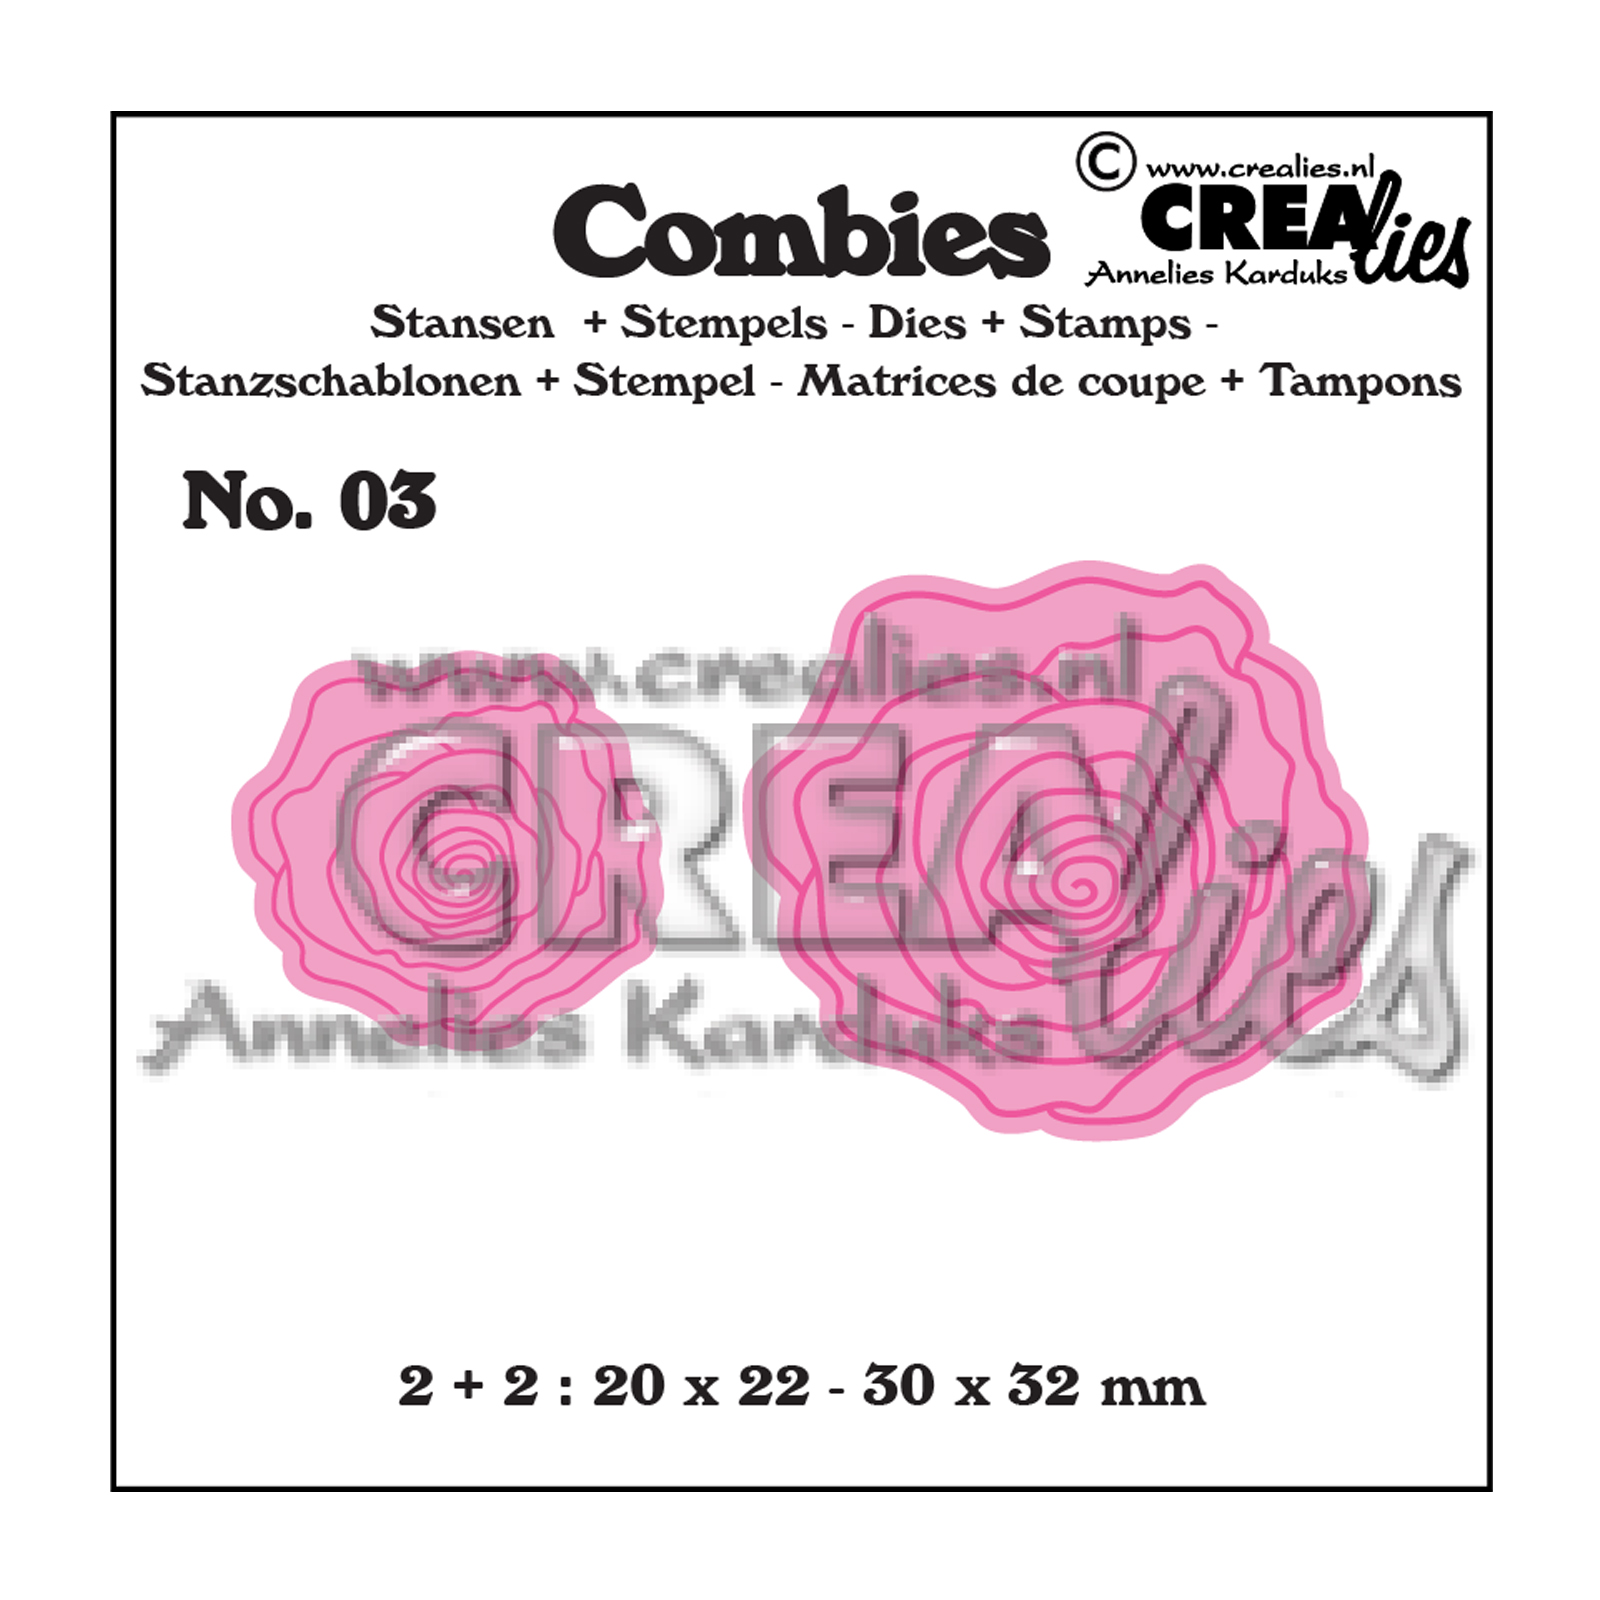 Crealies • Combies matrice de découpe & tampon set no.03 Roses small